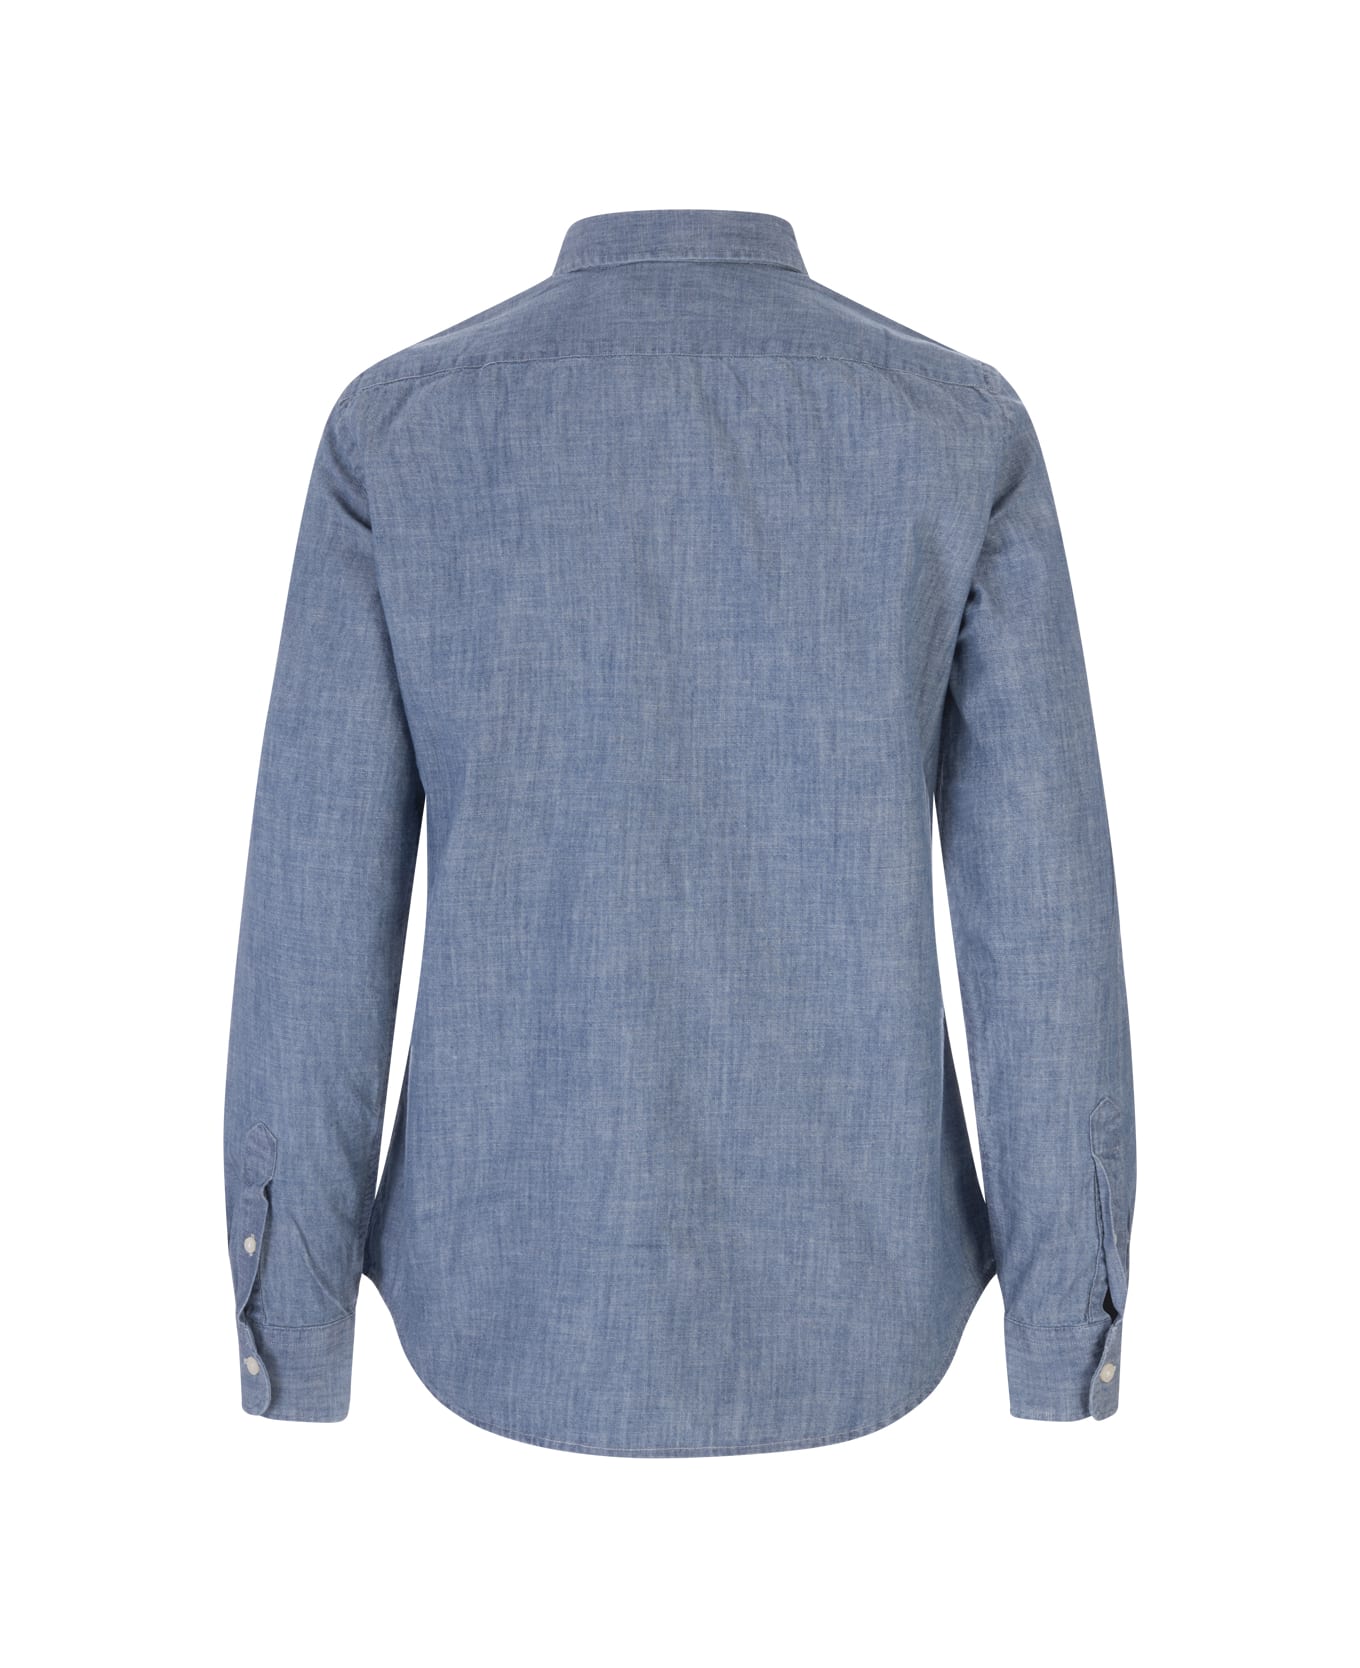 Ralph Lauren Shirt In Indigo Cotton Chambray - Blue